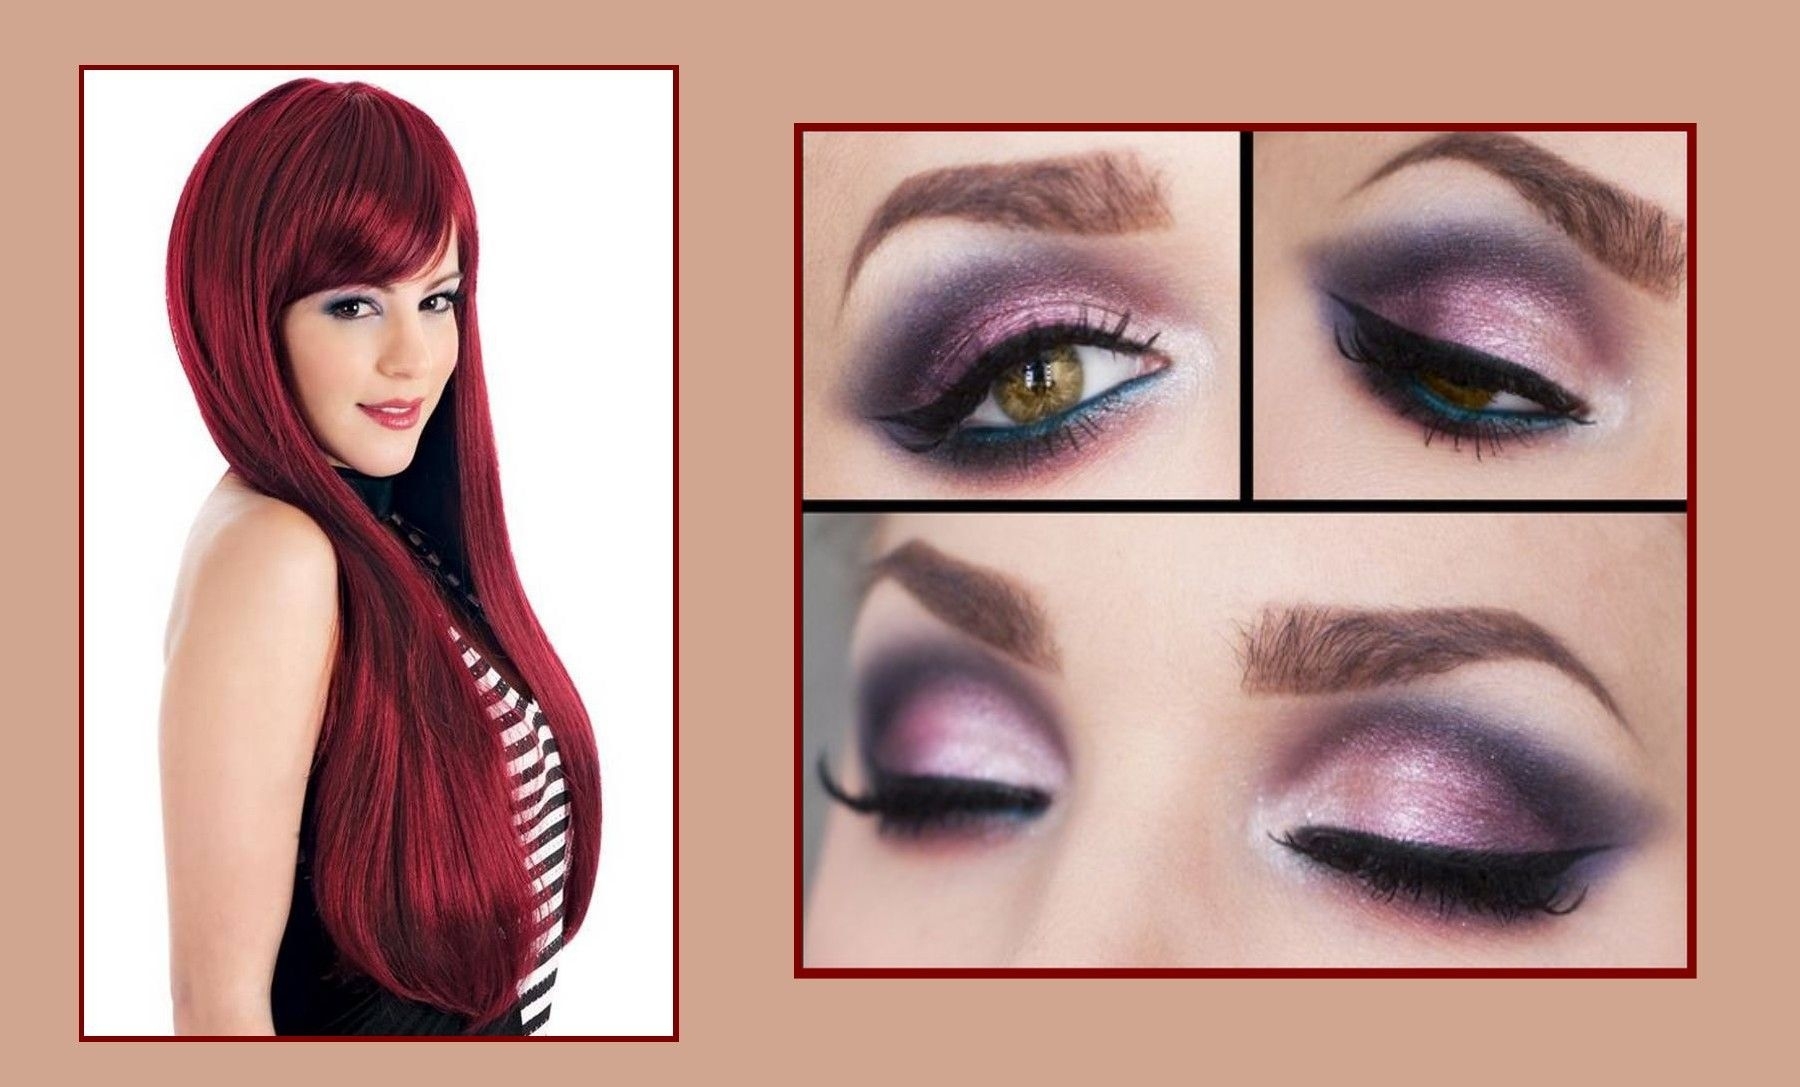 Eye Makeup For Hazel Eyes And Red Hair | Eye Makeup, Makeup regarding Makeup For Hazel Eyes And Red Hair